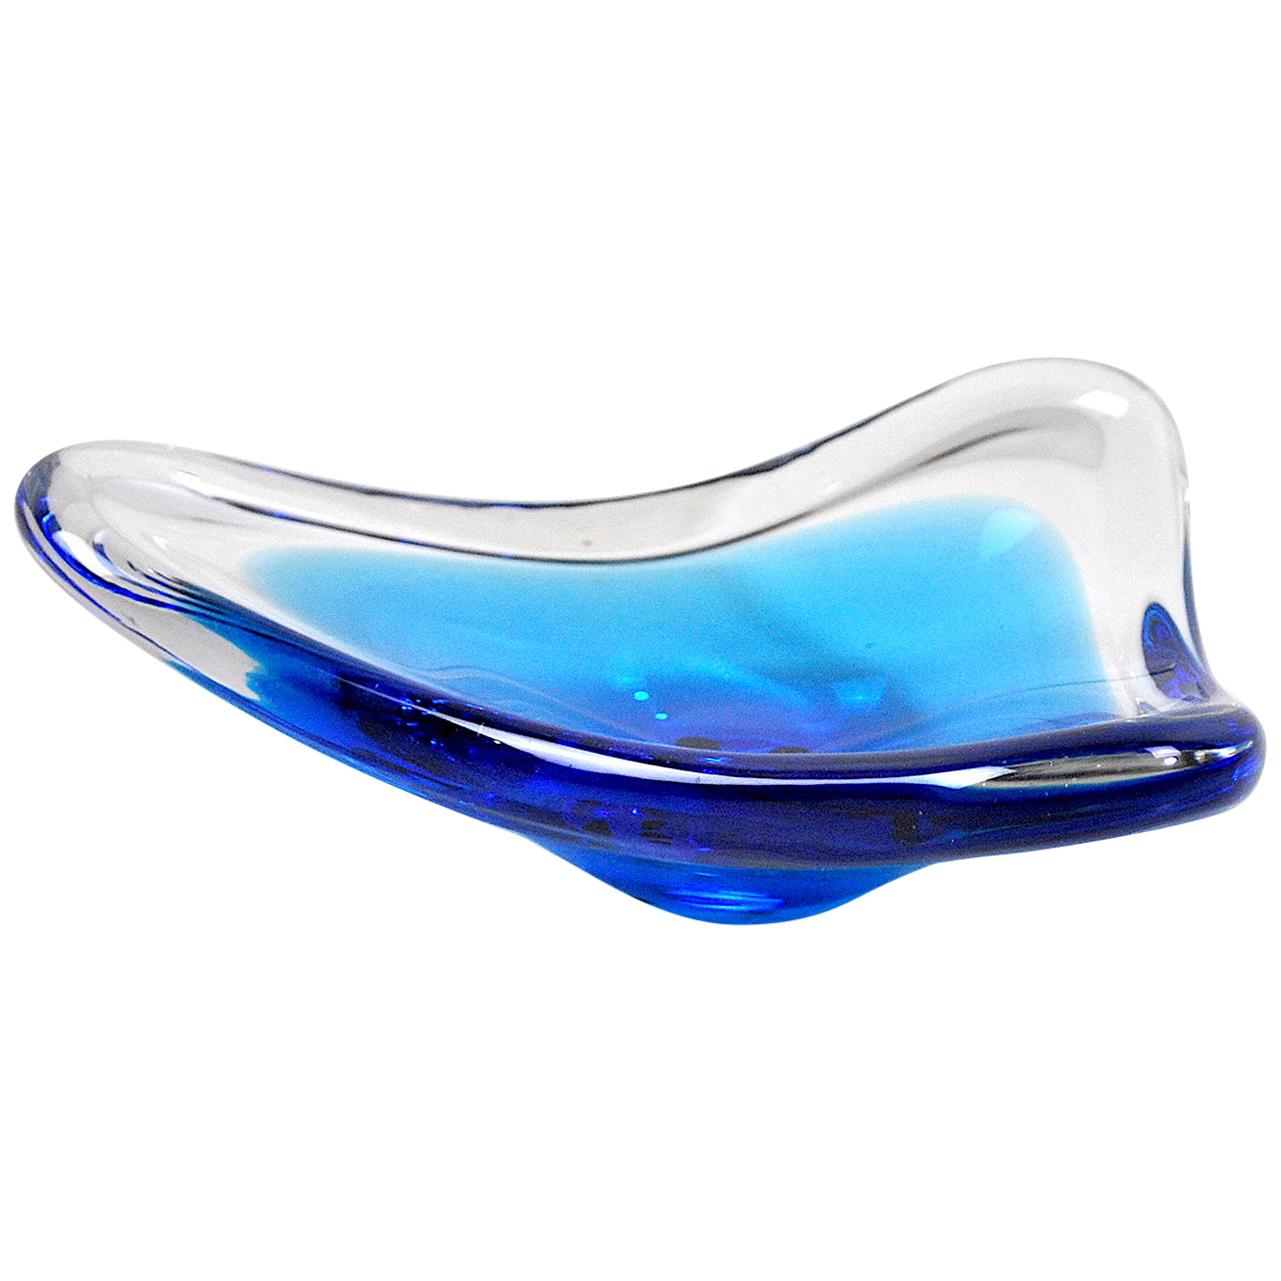 Italian Midcentury Empty Pockets 1960s Submerged Murano Glass